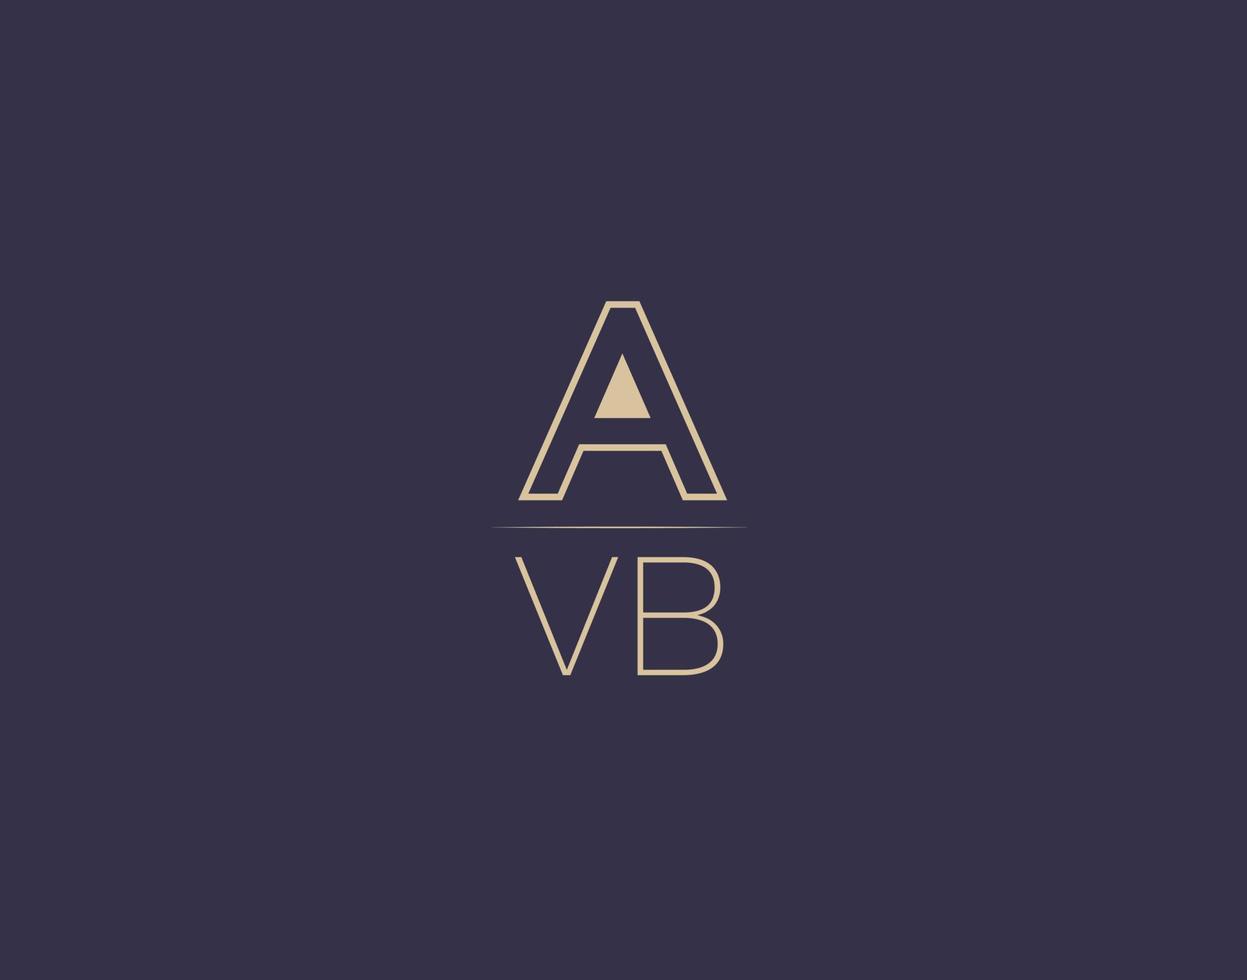 avb carta logo diseño moderno minimalista vector imágenes